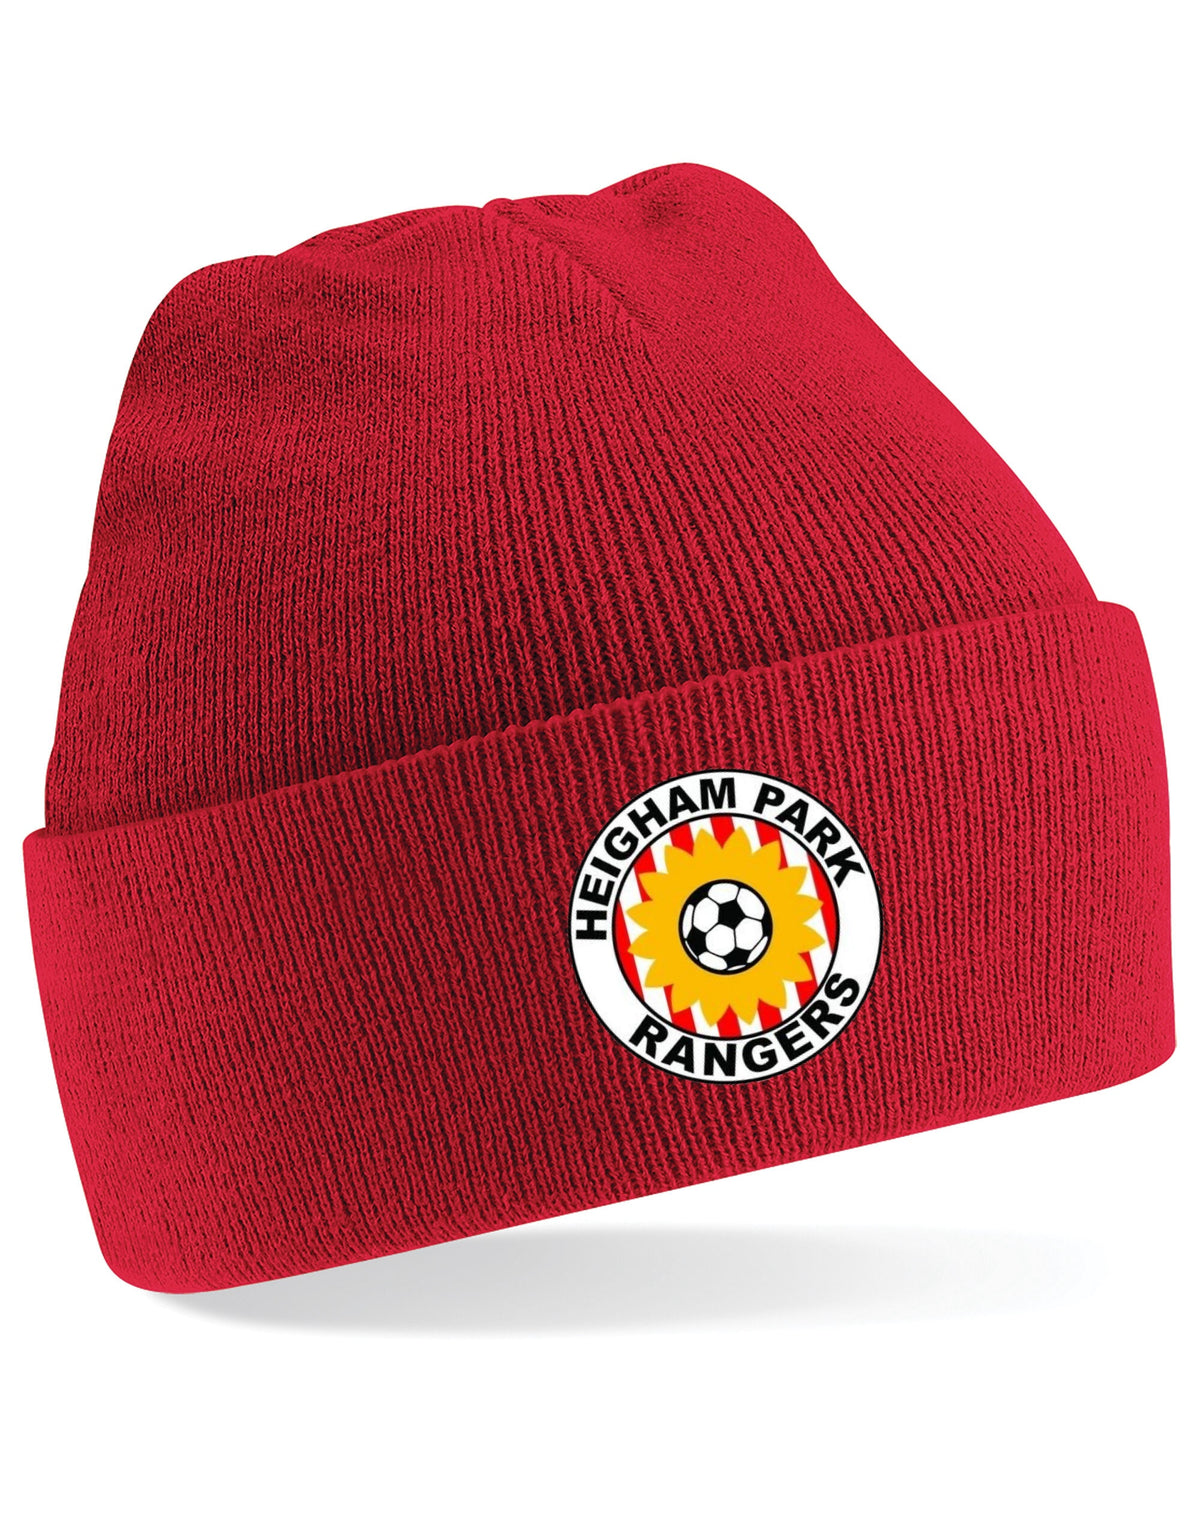 Heigham Park Rangers FC Beanie Hat in Adult